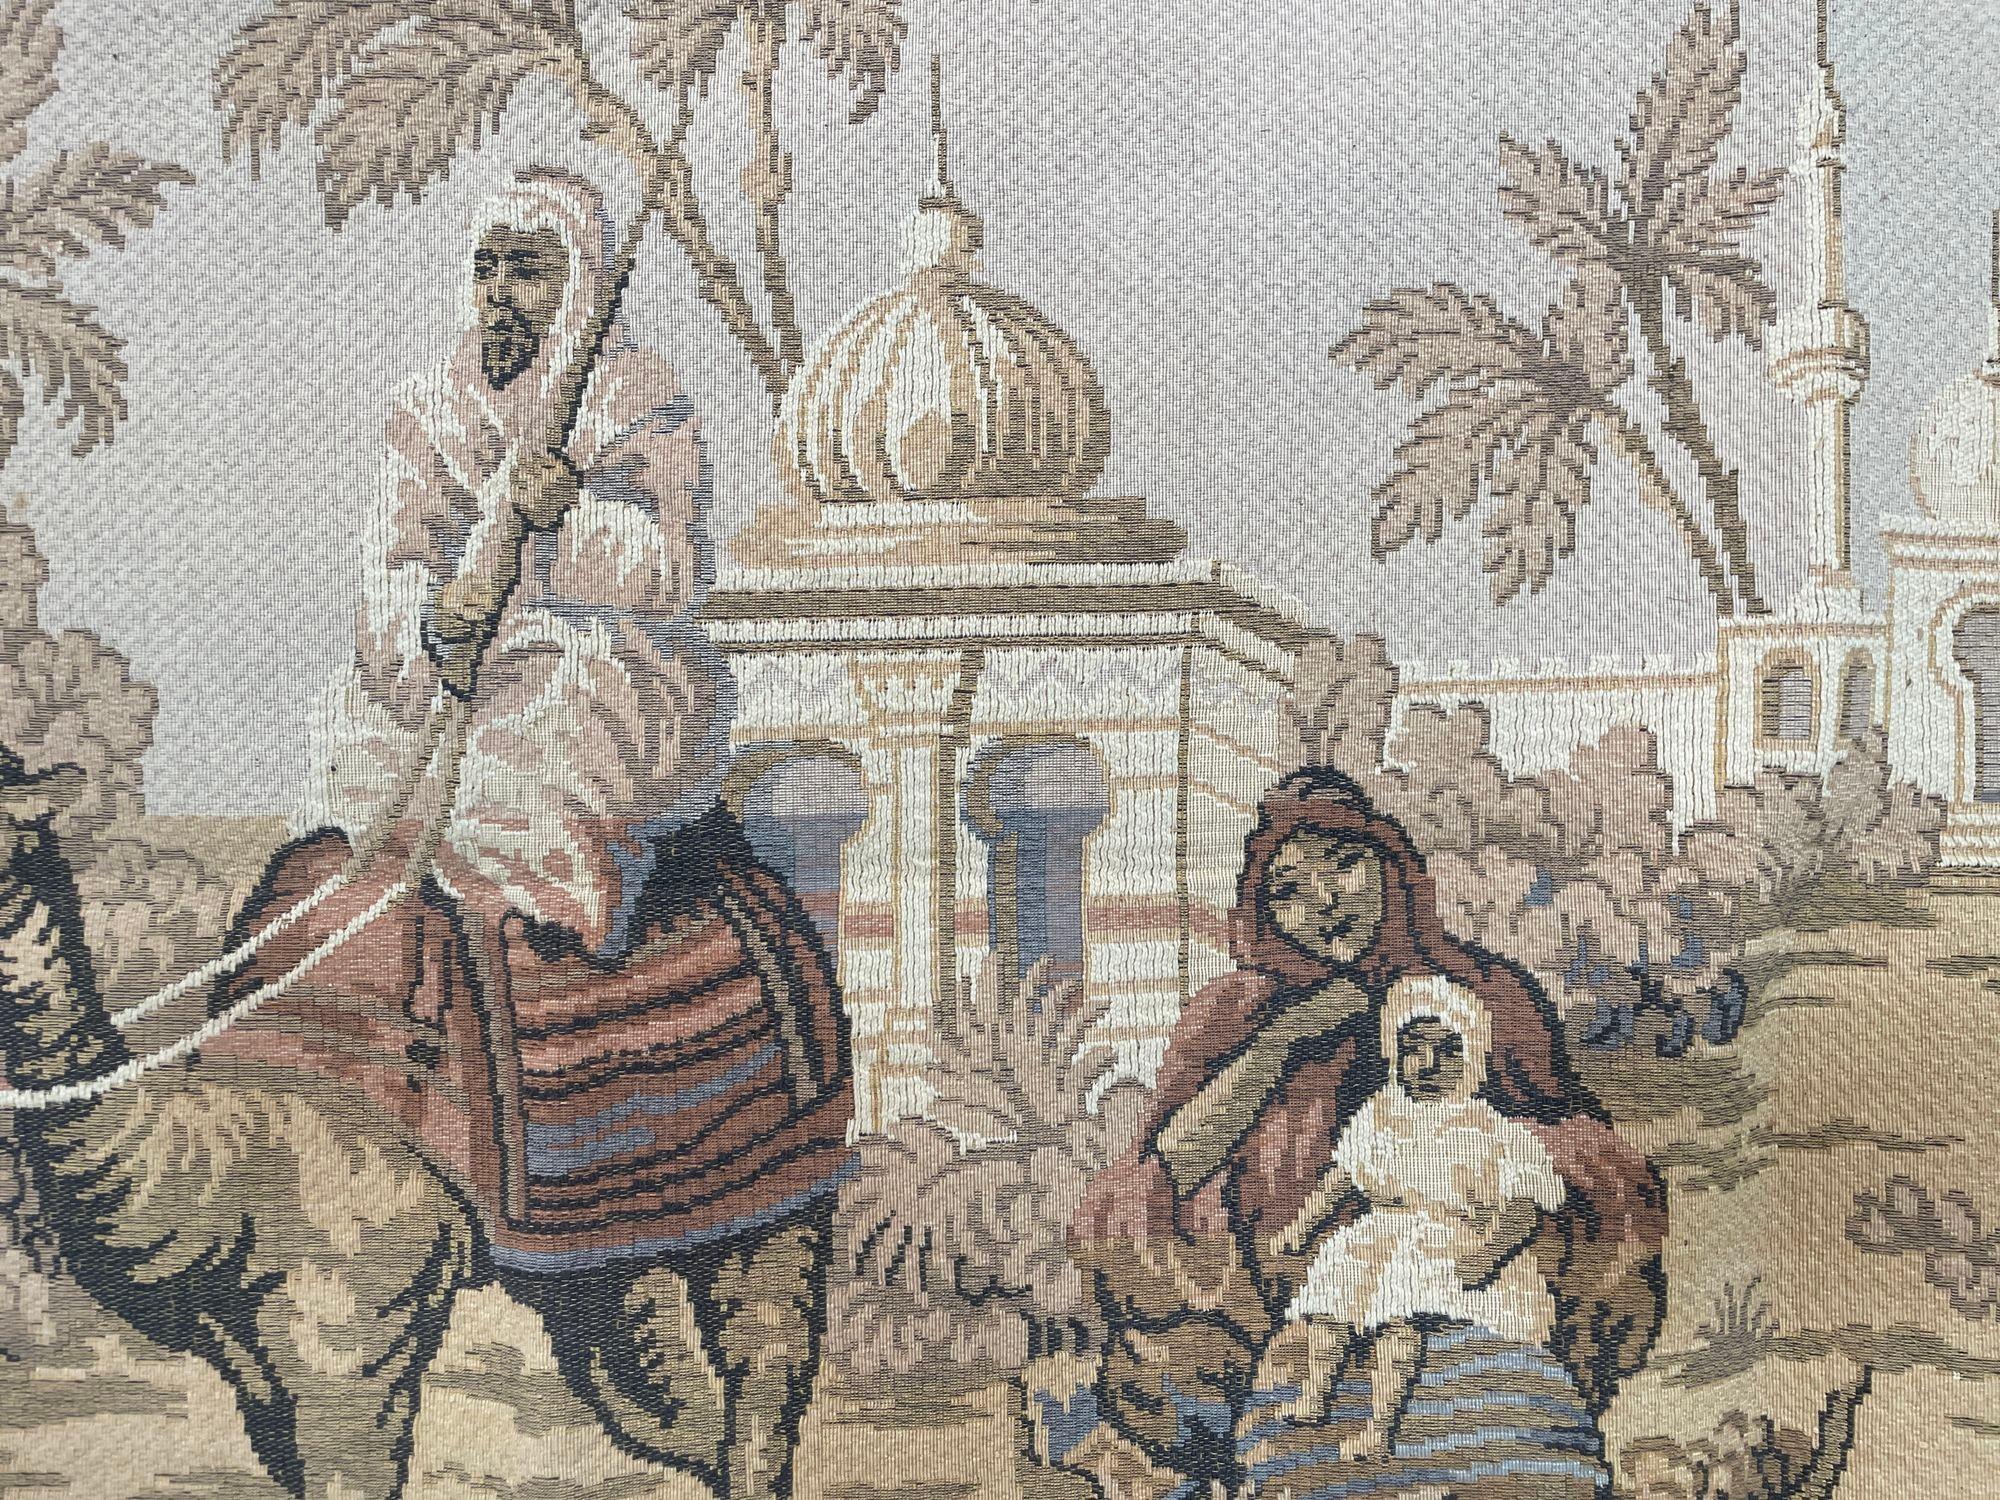 Belgian Orientalist Tapestry With 19th Century Moorish Architecture Scene